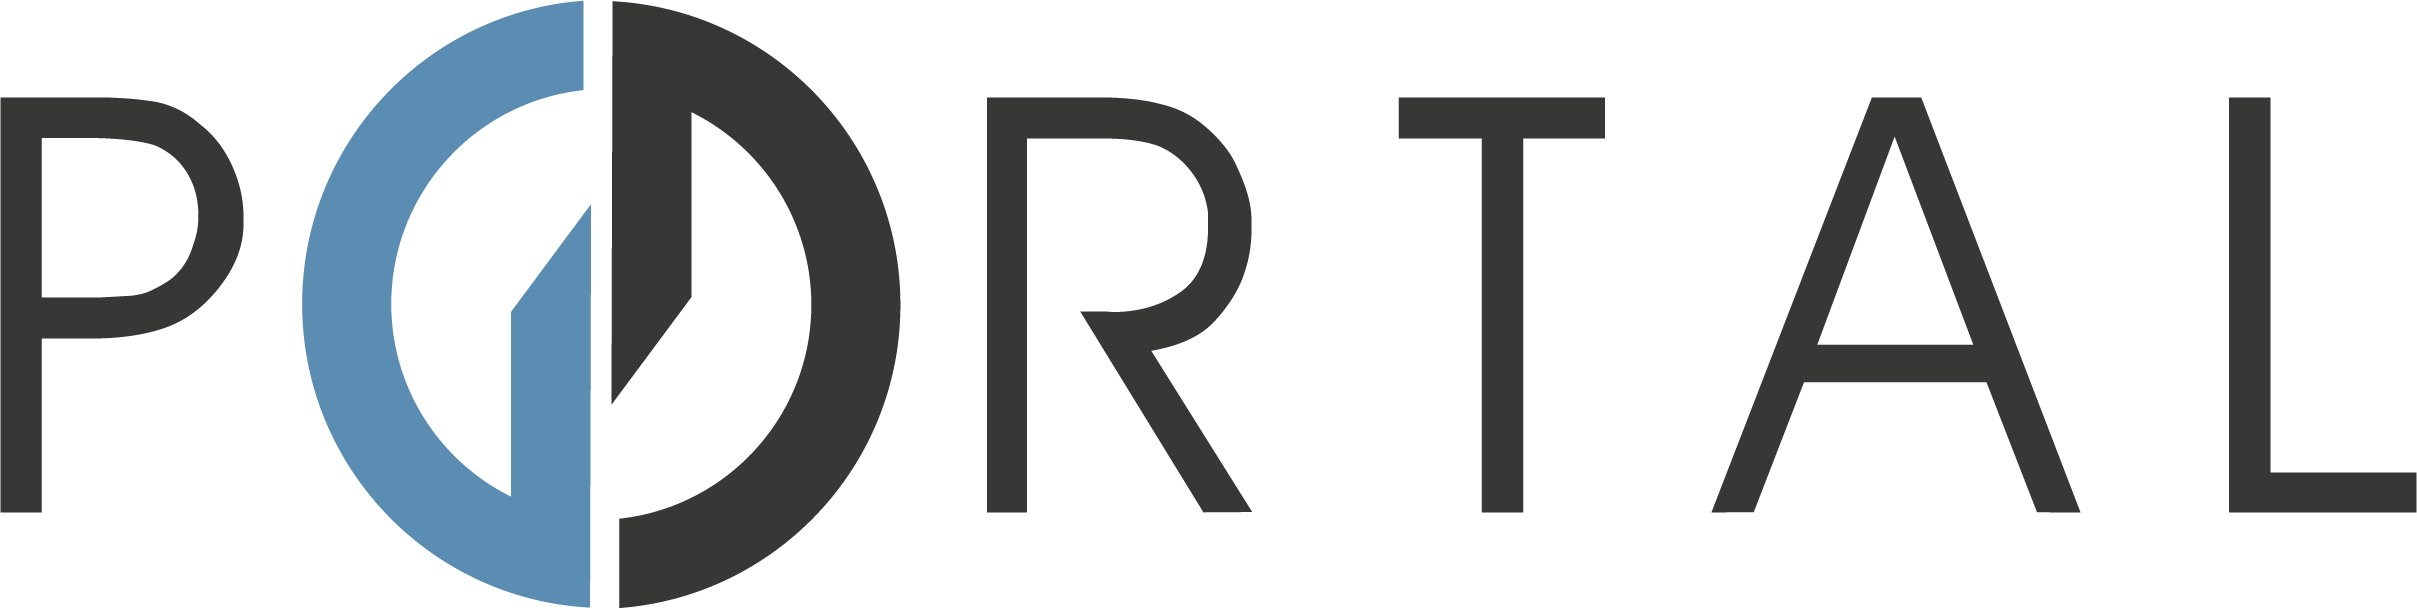 Gray Dawes PORTAL logo